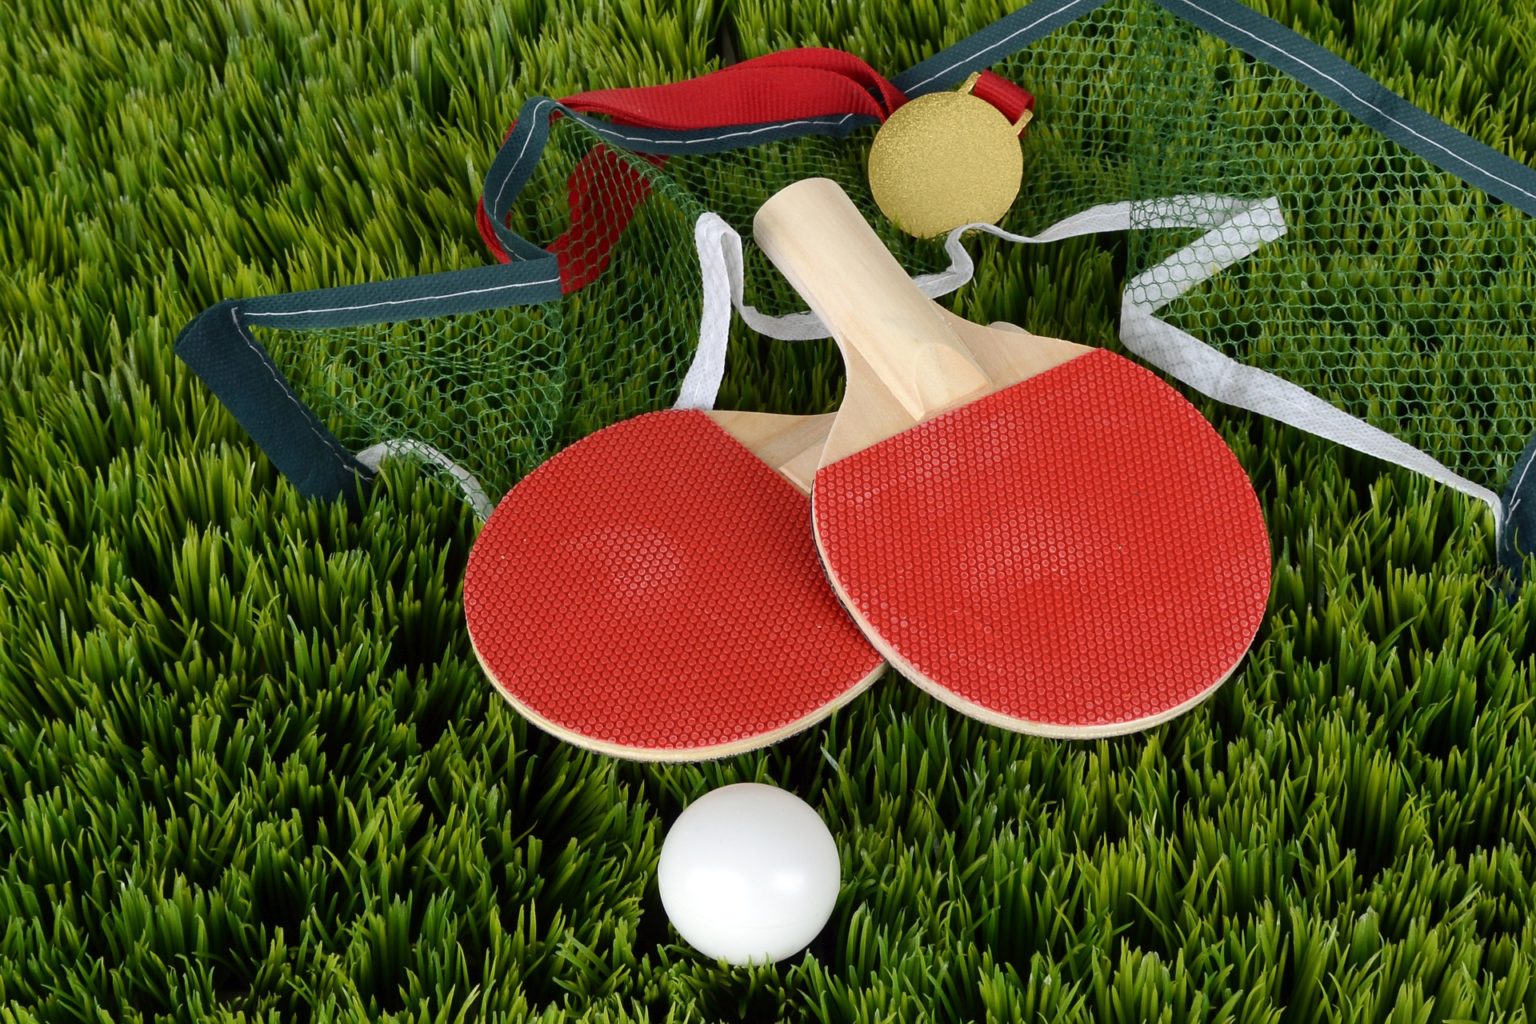 Table Tennis 1428052 1920 1536x1024 